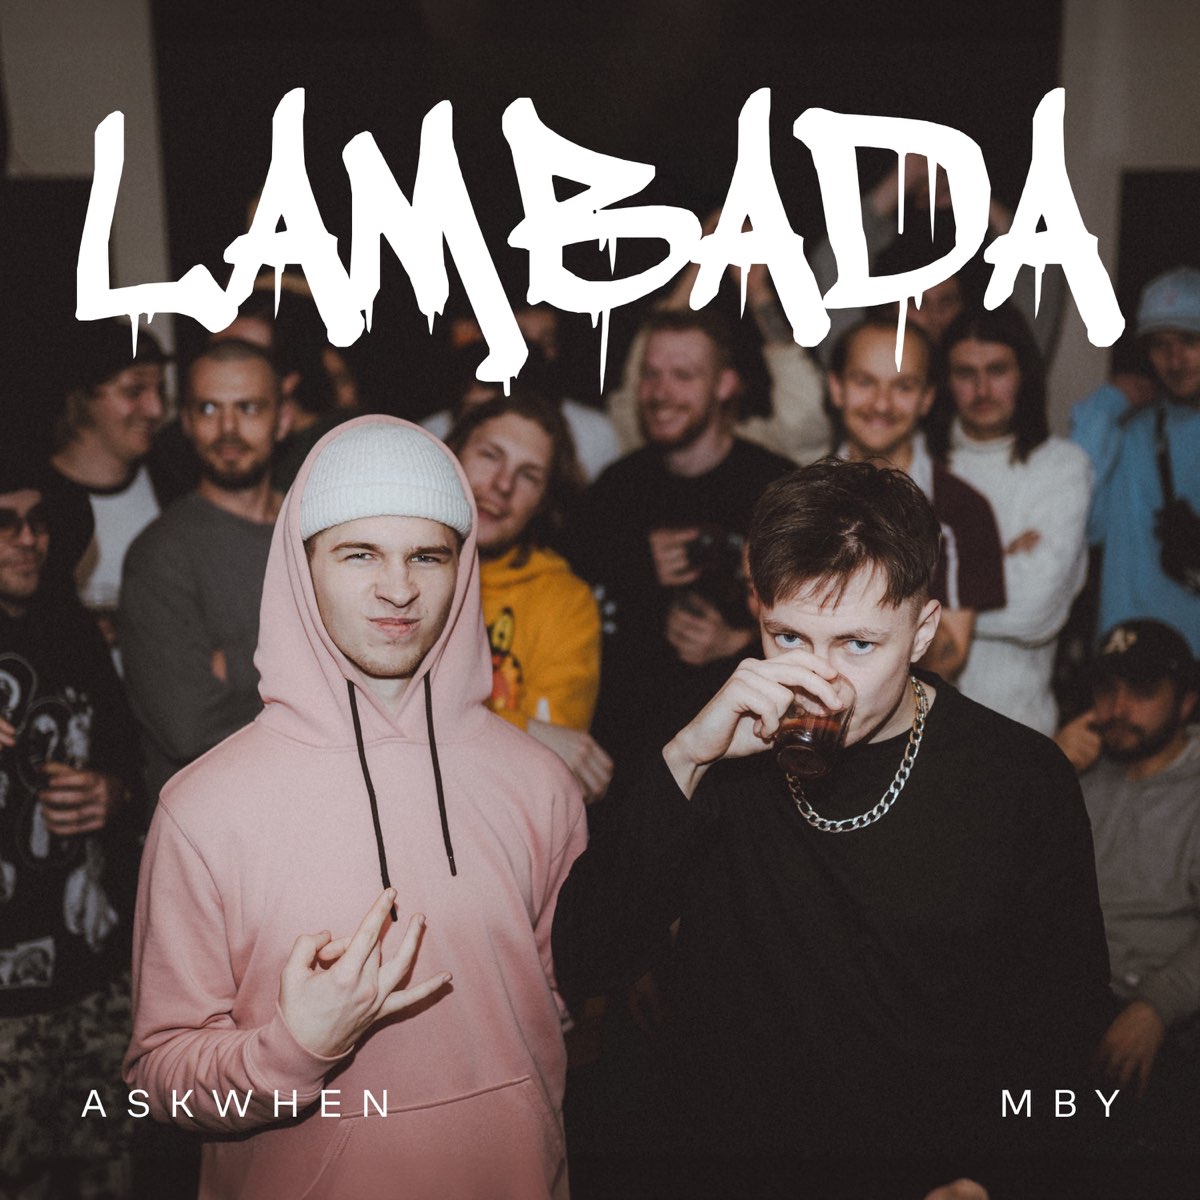 lambada - Single – Album von askwhen & MBY – Apple Music